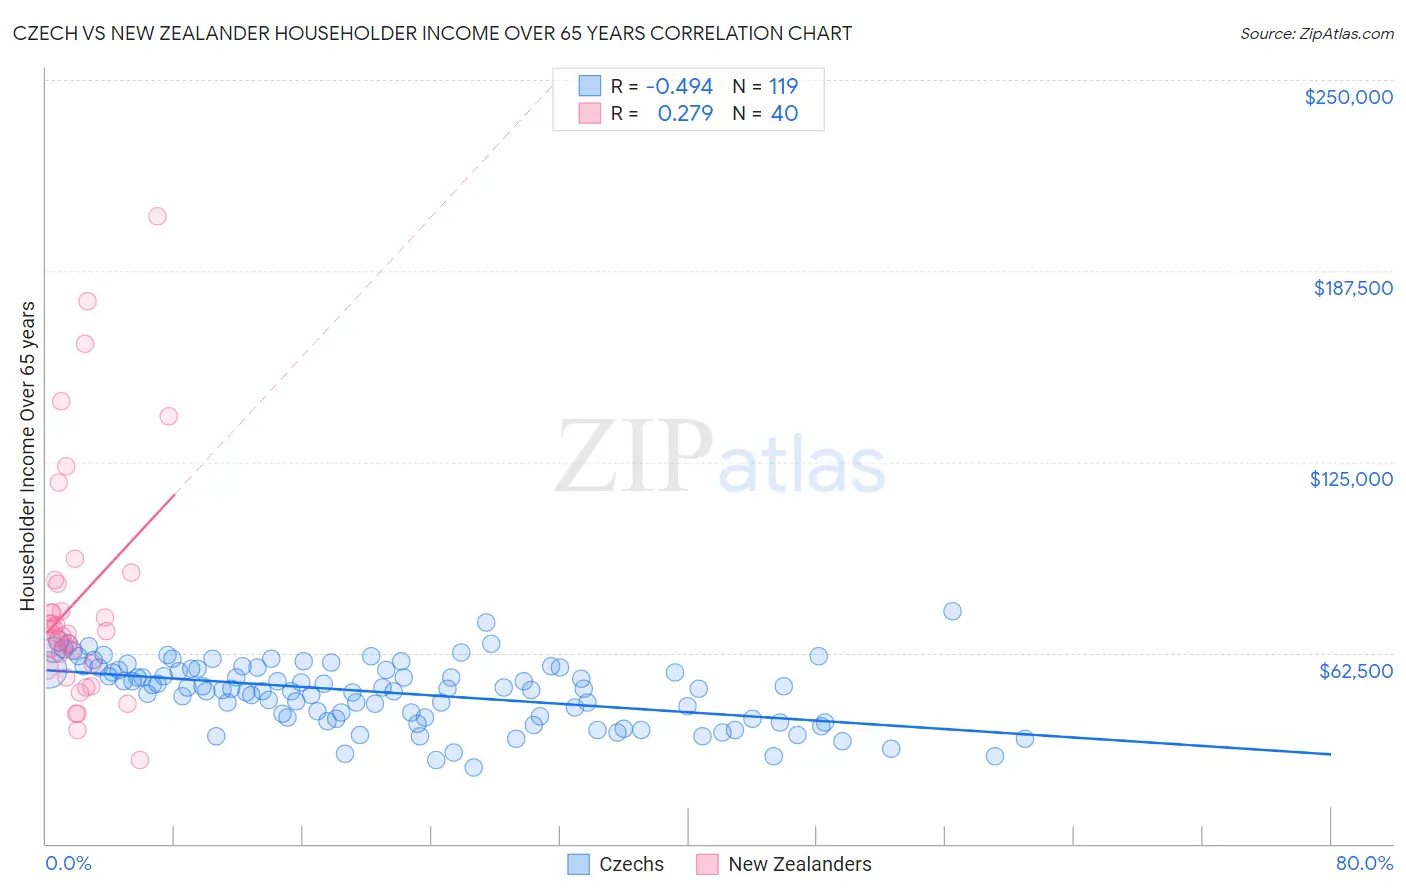 Czech vs New Zealander Householder Income Over 65 years